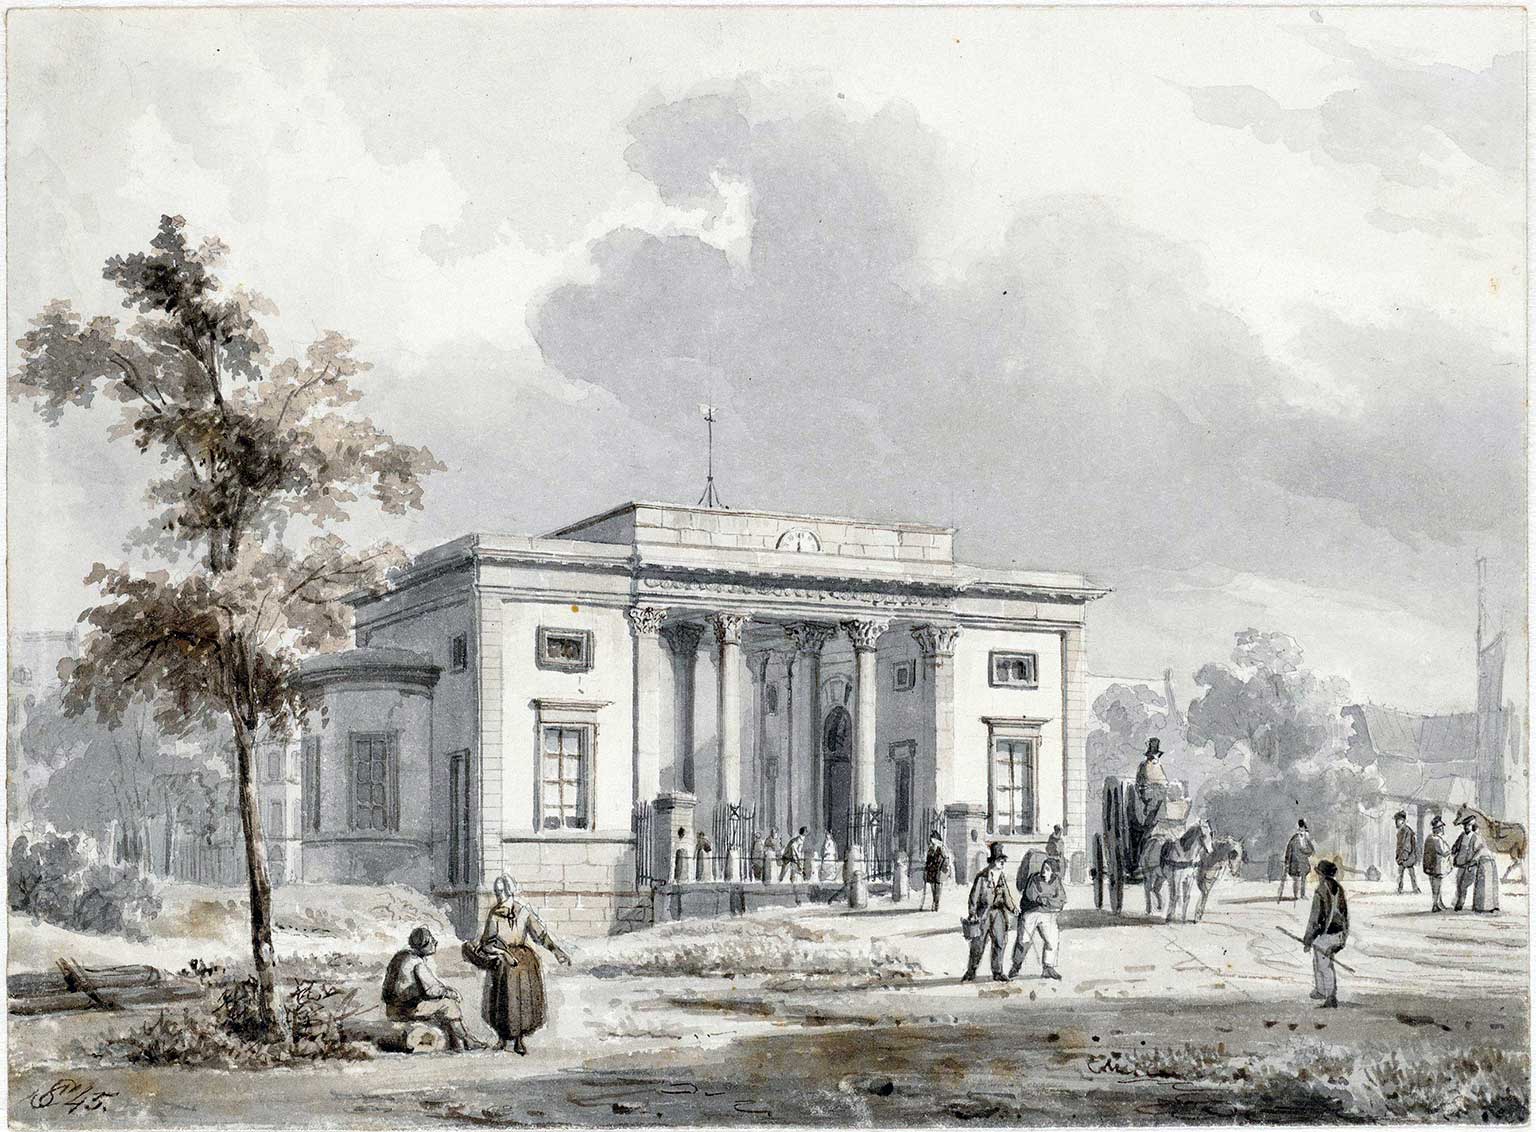 Engraving of the 5th Haarlemmerpoort, Amsterdam, in 1845